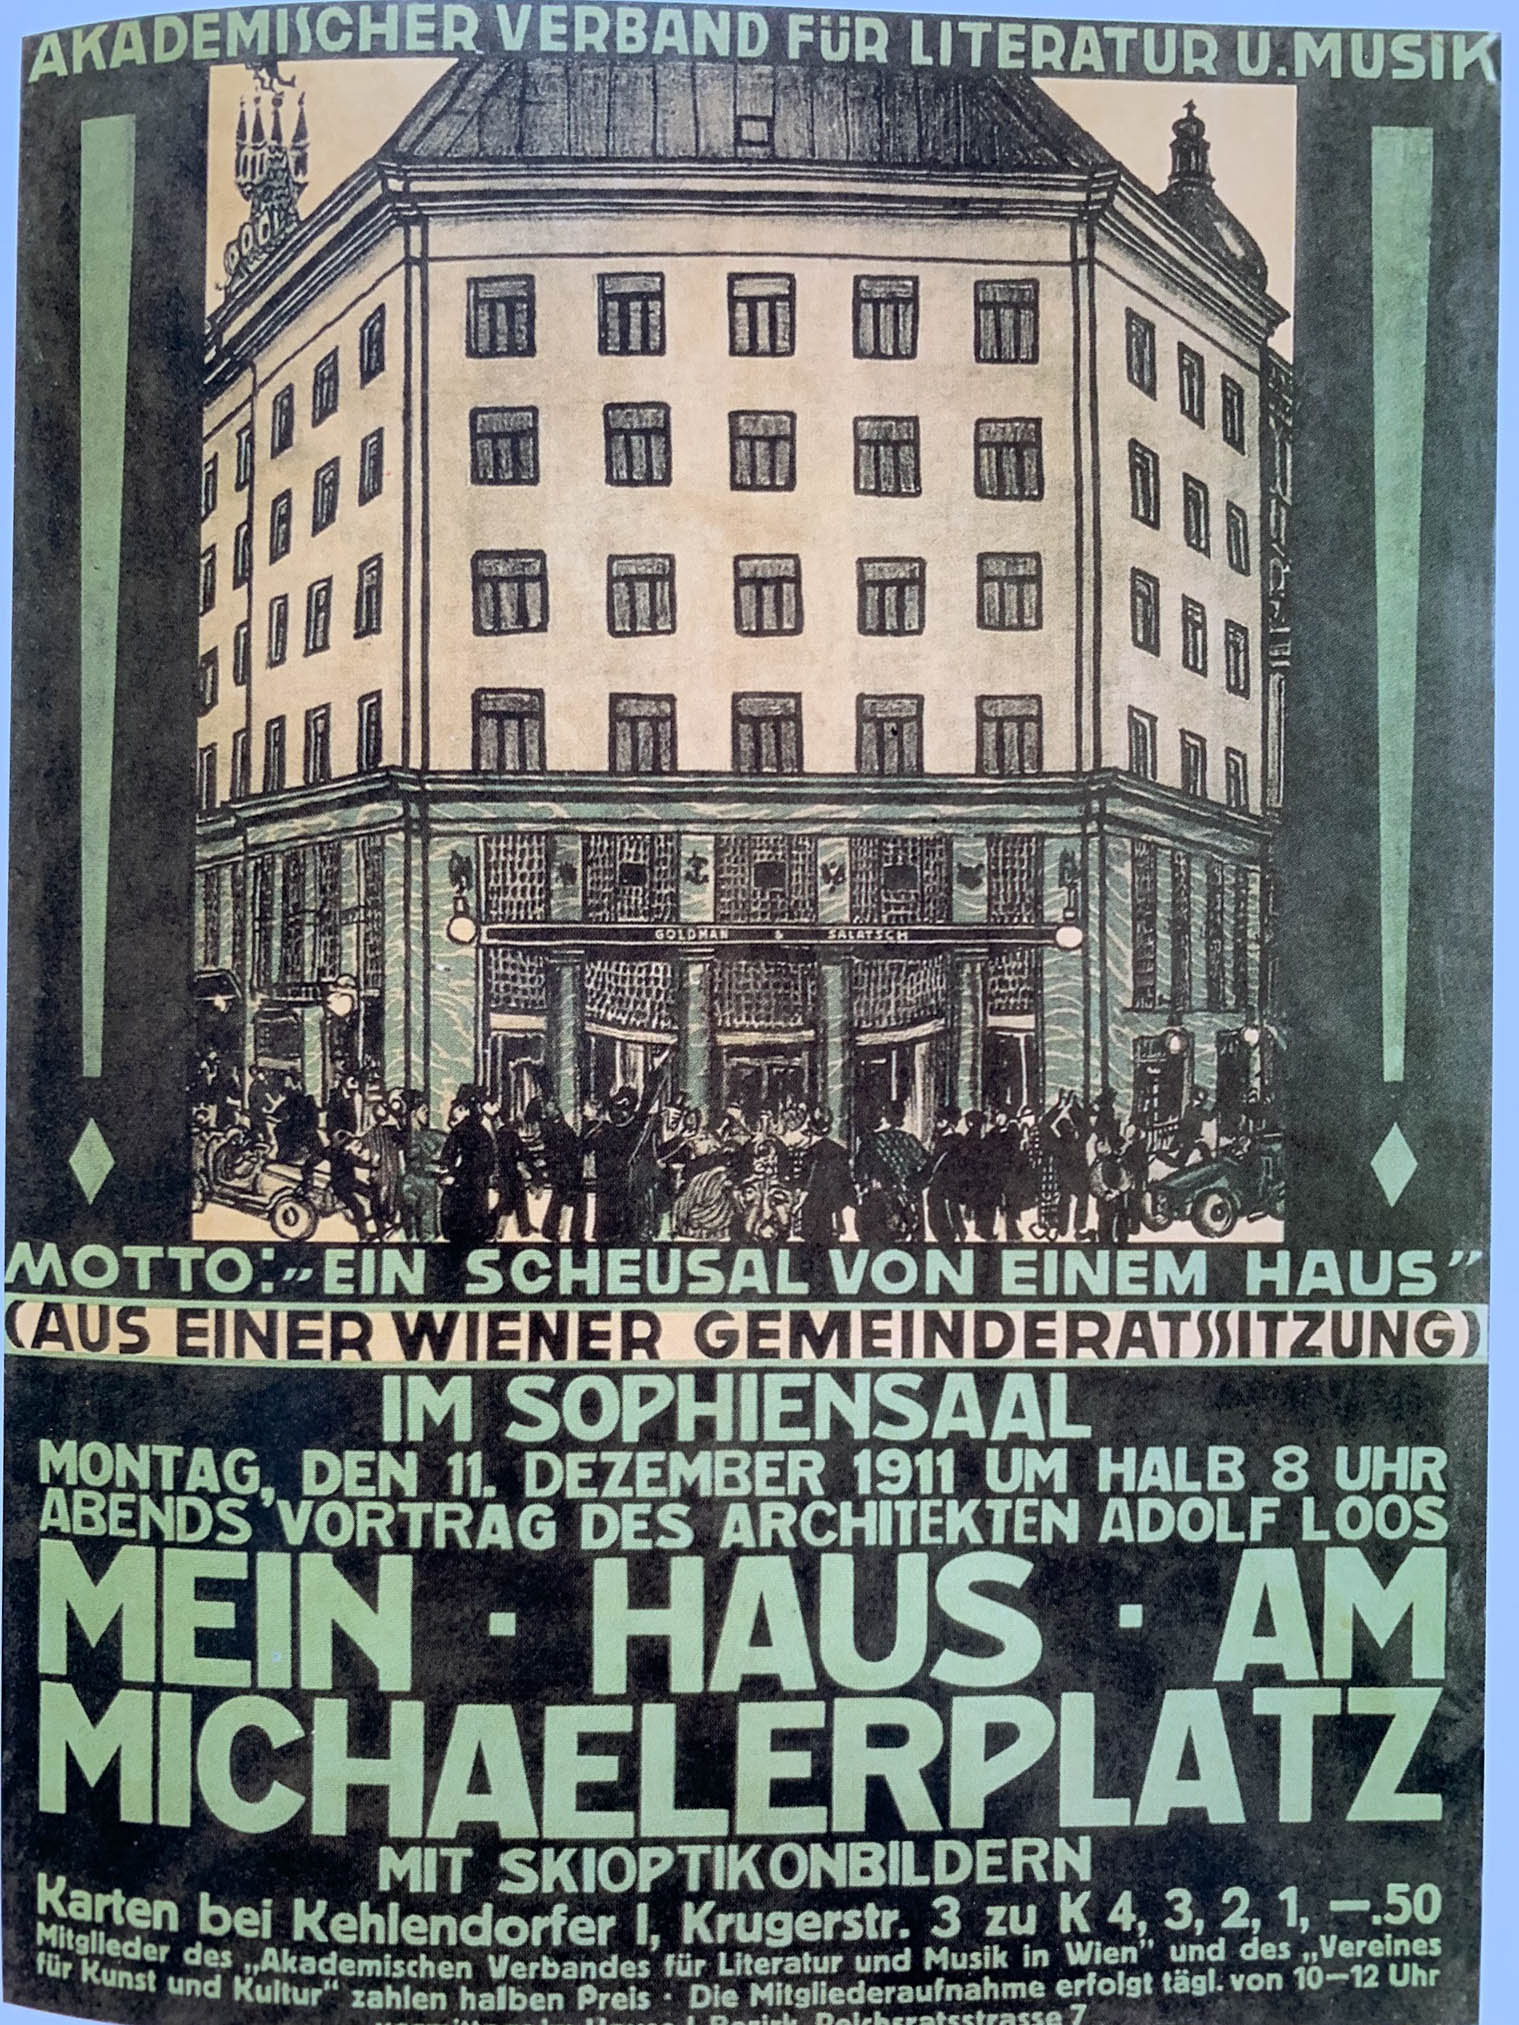 Loos-Haus, 1909-1911. Architect: Adolf Loos